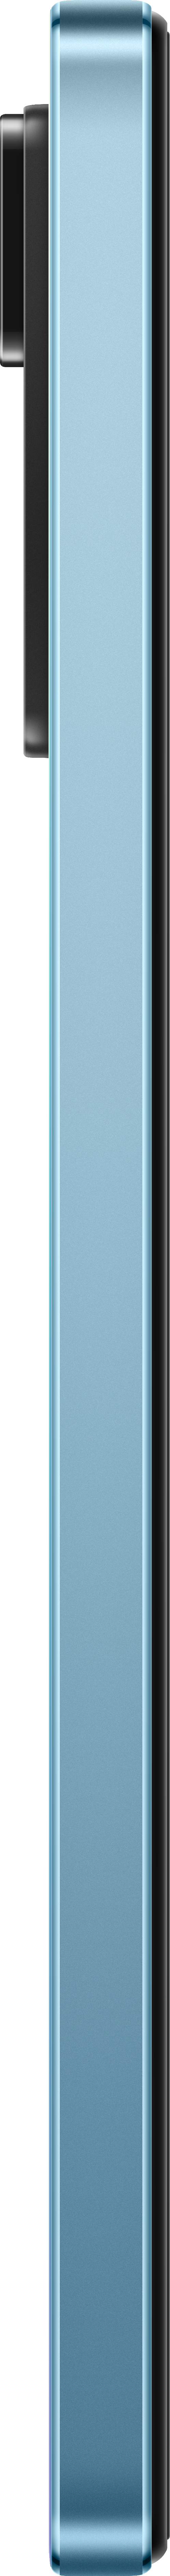 XIAOMI Redmi Note 11 Pro 128 Dual Blue GB SIM Star